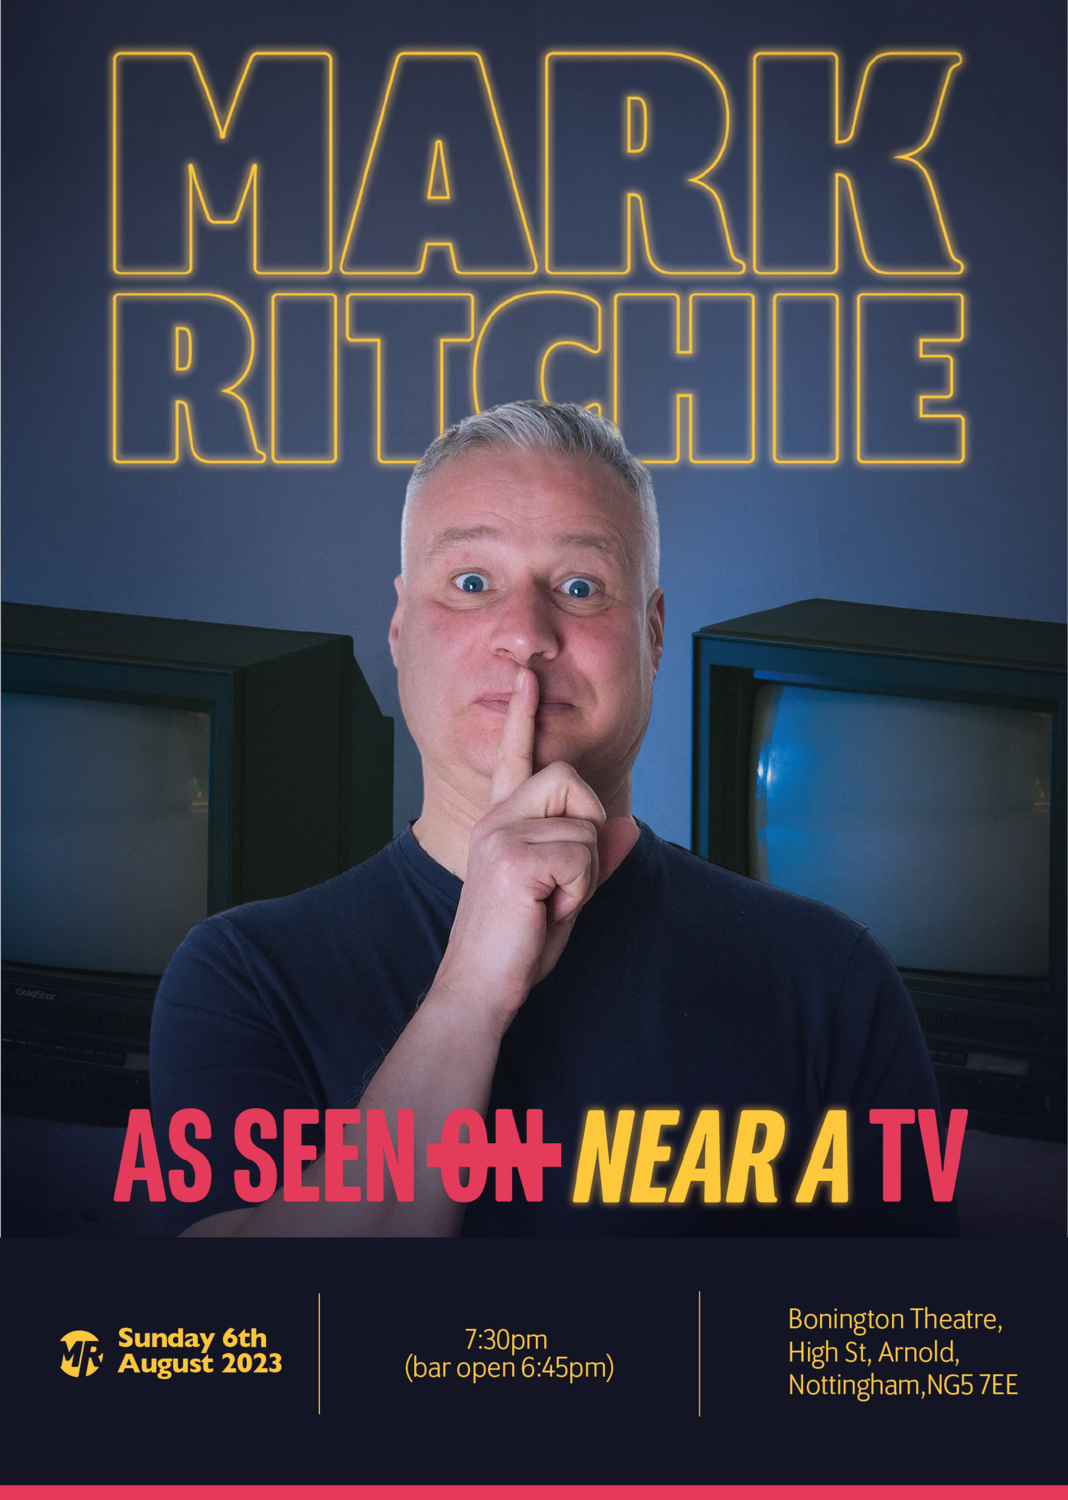 As Seen Near a TV, comedy show - Mark Ritchie